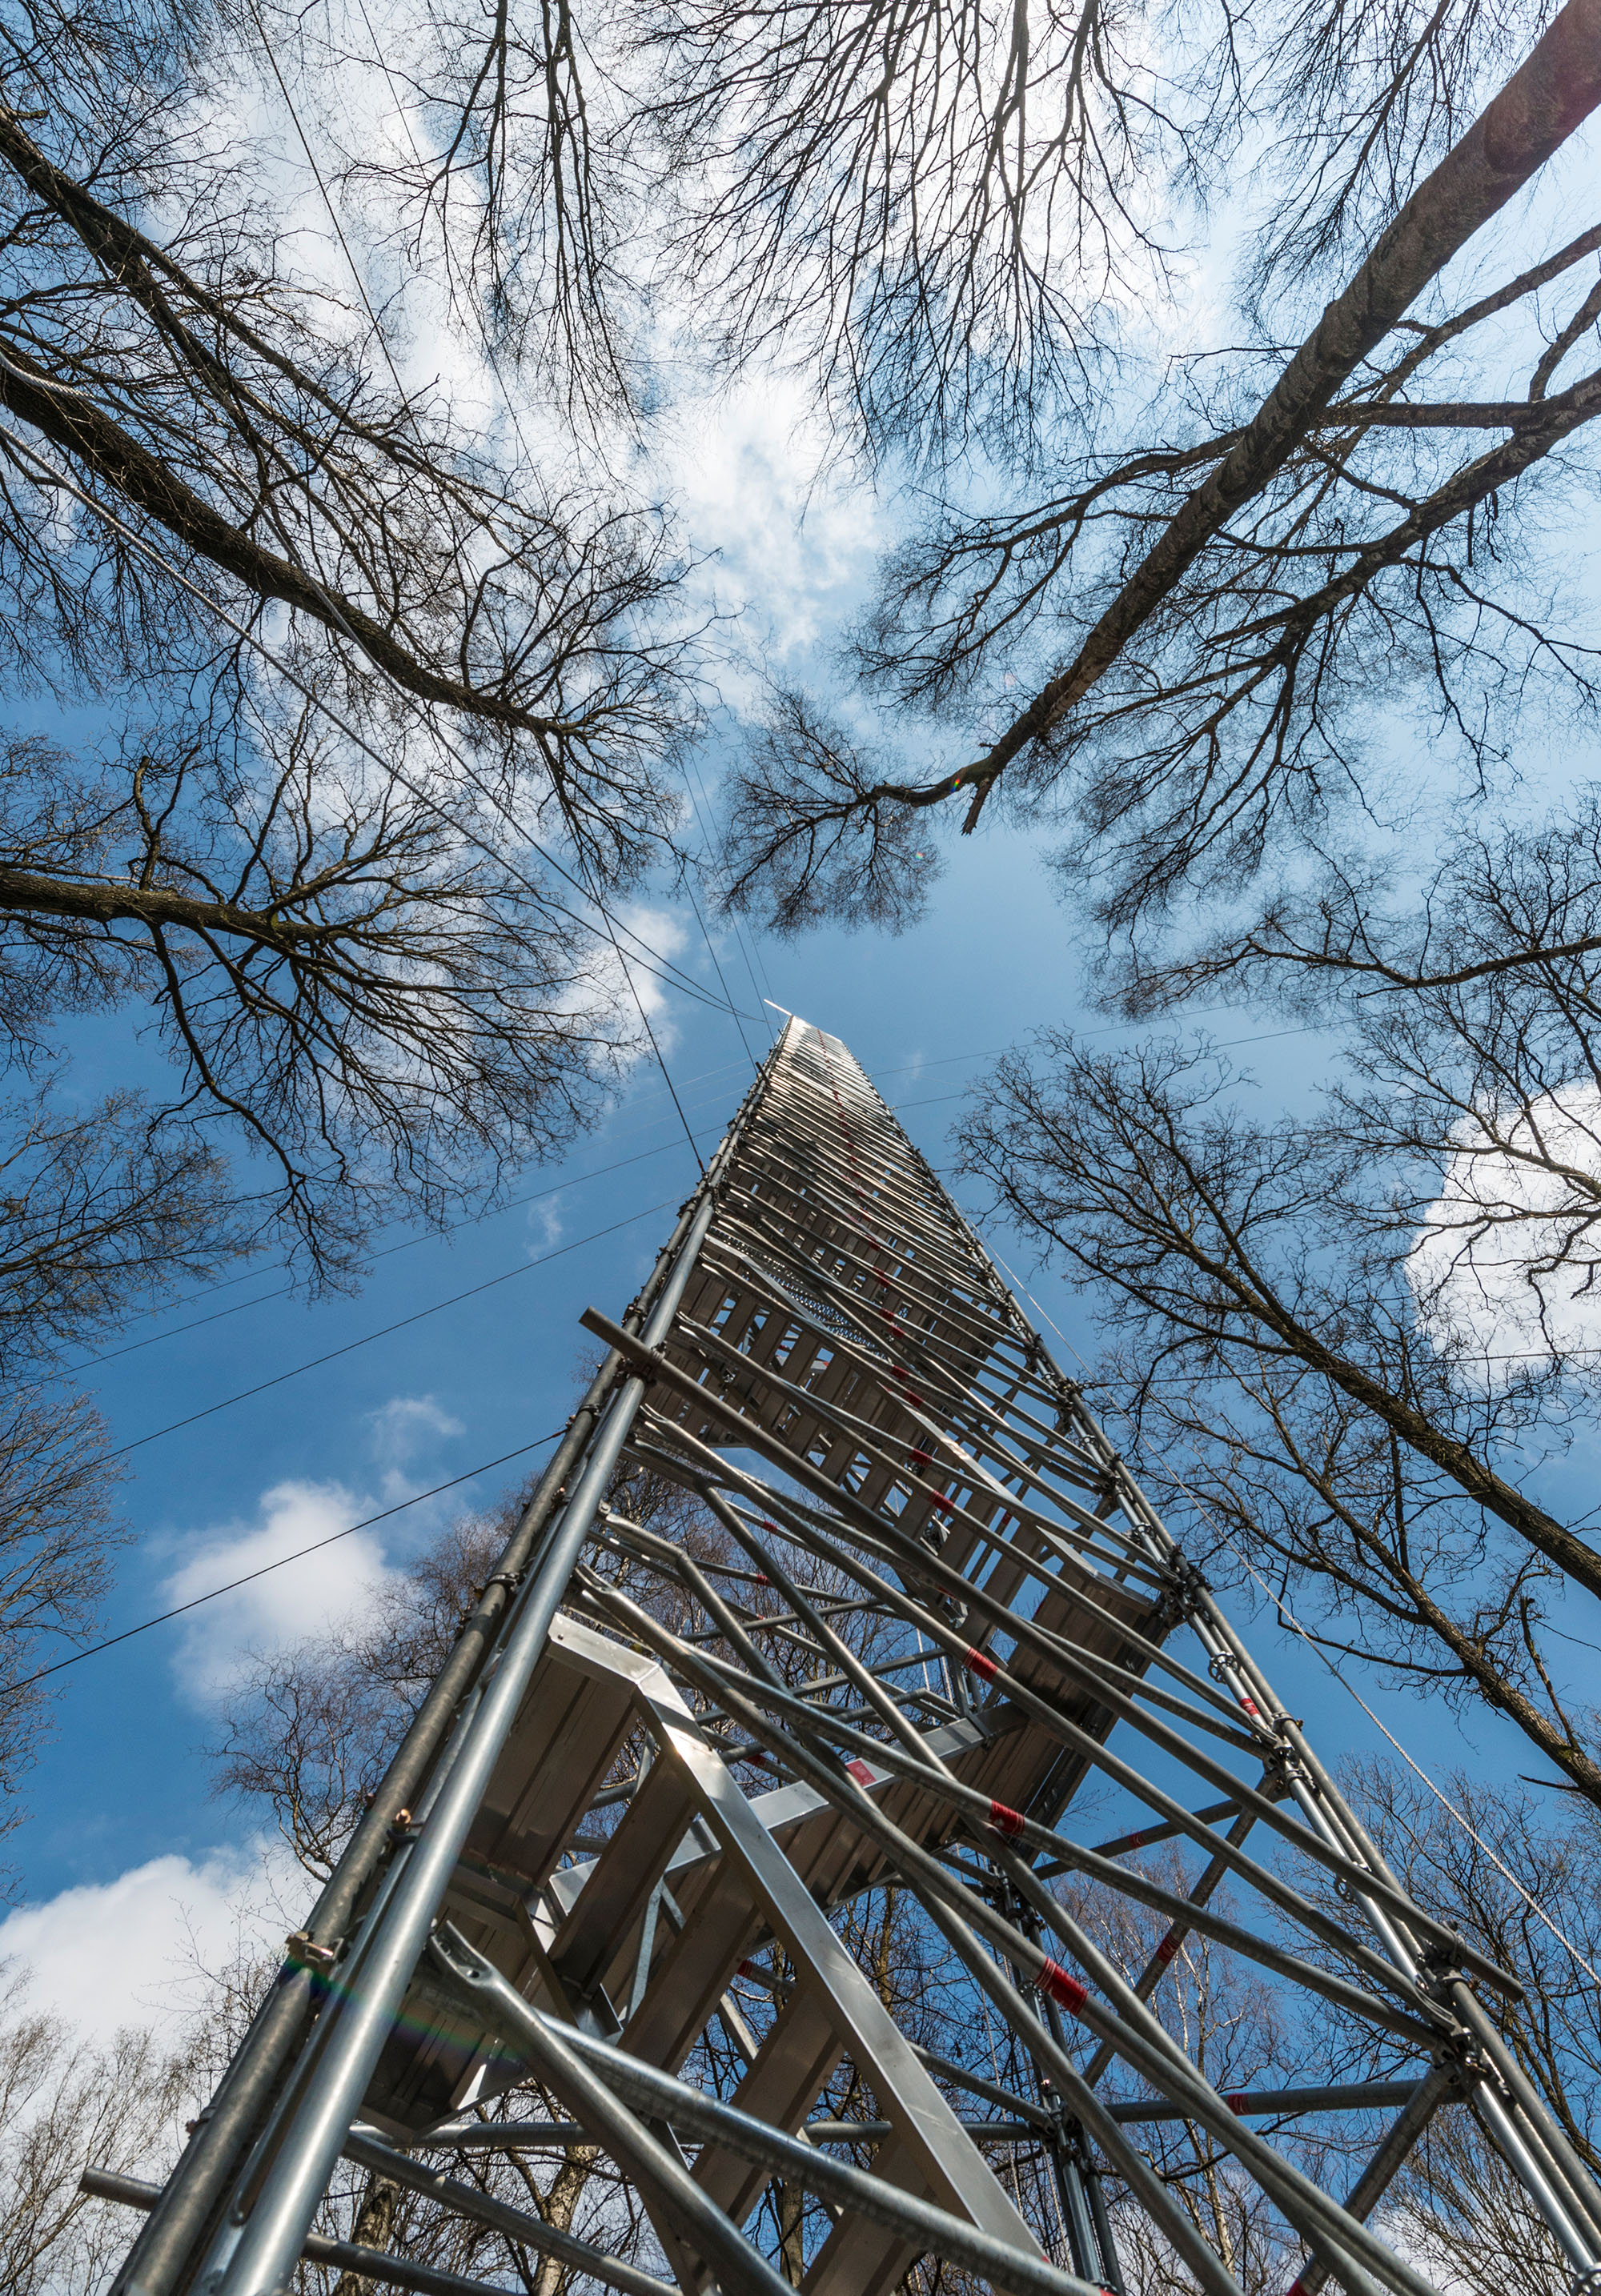 50 m hoher Eddy-Kovarianzturm am Standort 'Hohes Holz'.